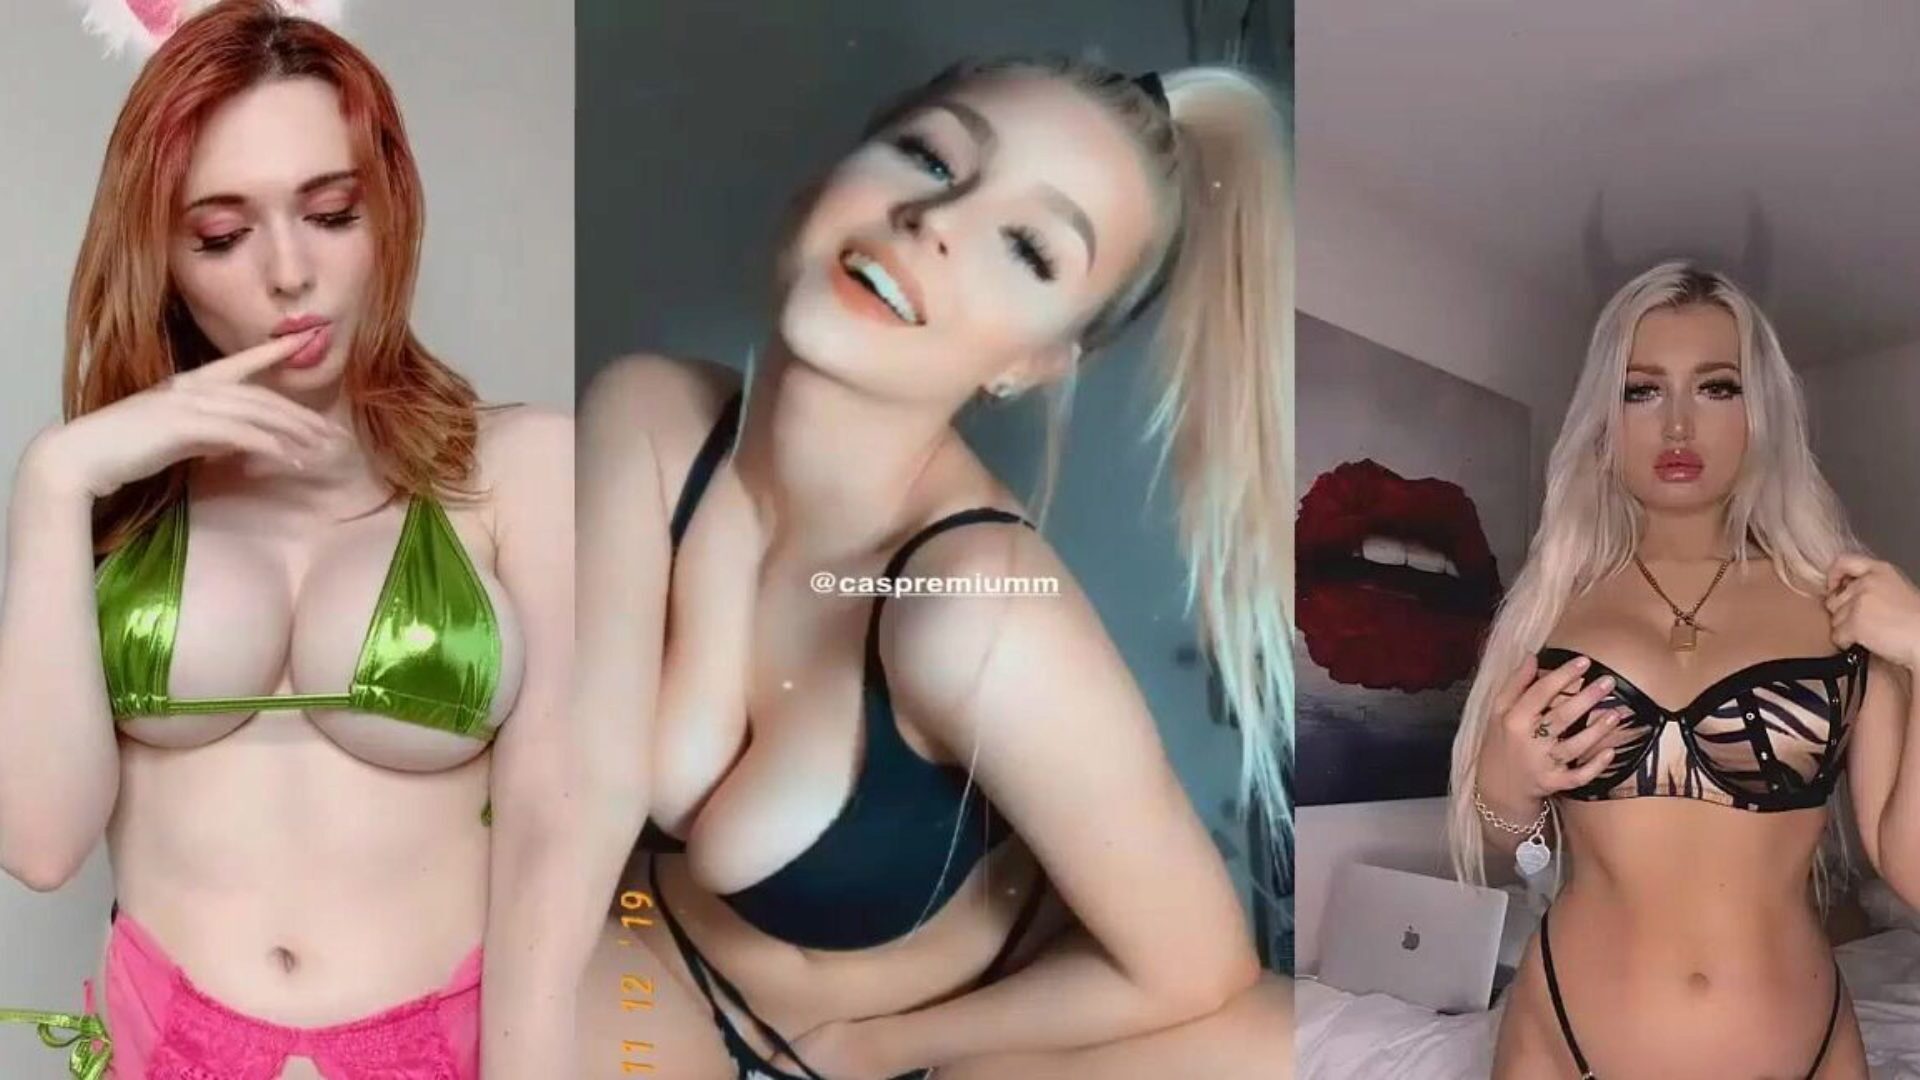 Split Screen Striptease Compilation of 29 Sexy Onlyfans Girls